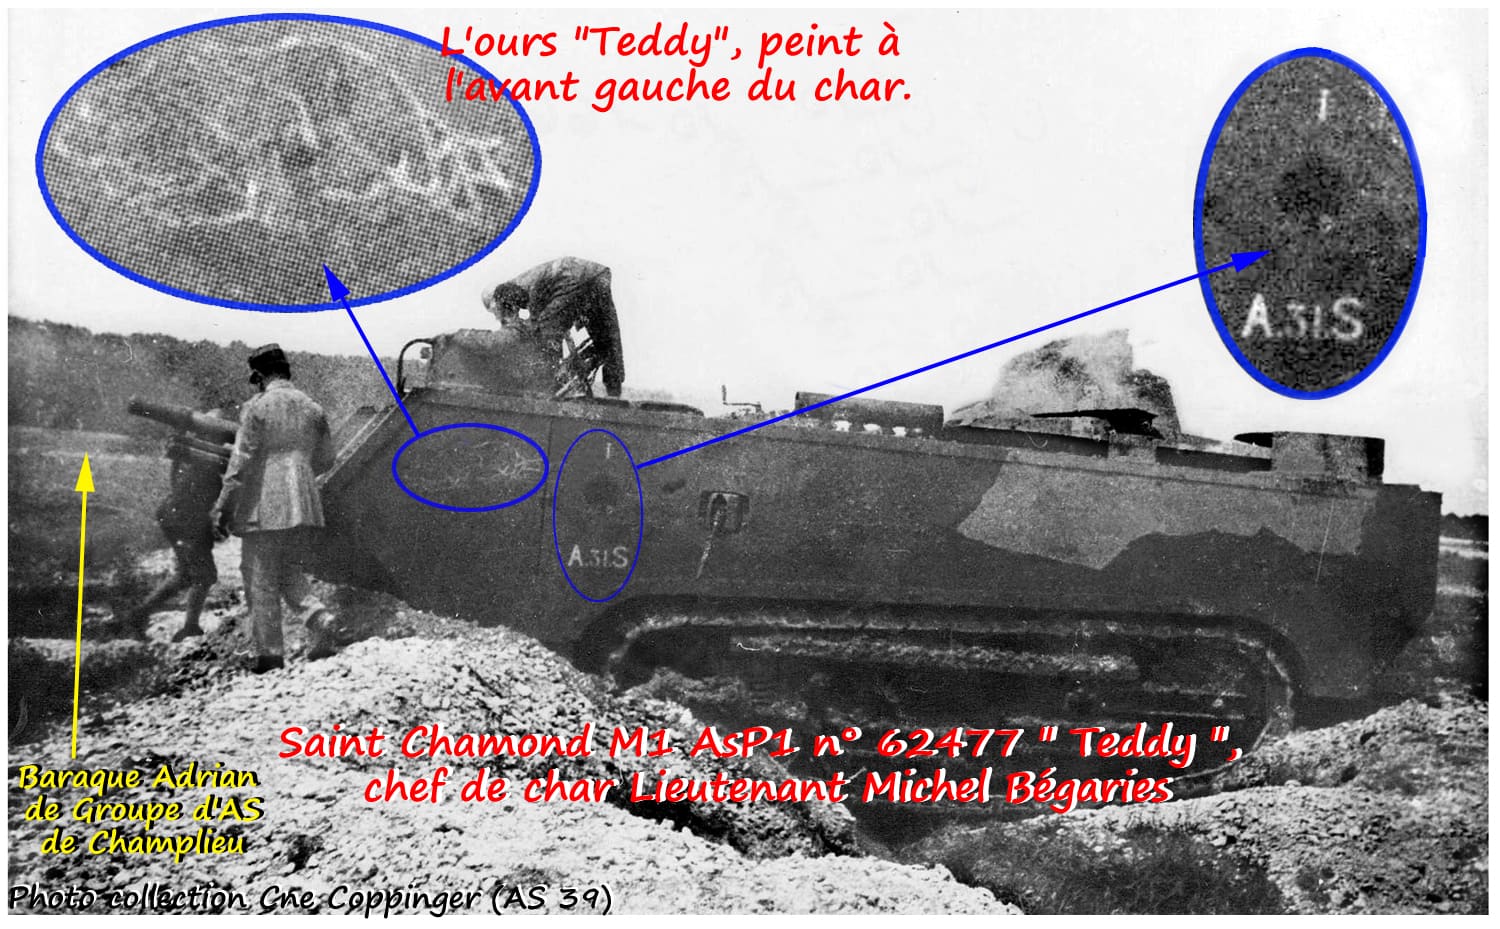 09 - AS 31 - St Chamond M1 AsP1 n° 62477 Teddy-min.jpg